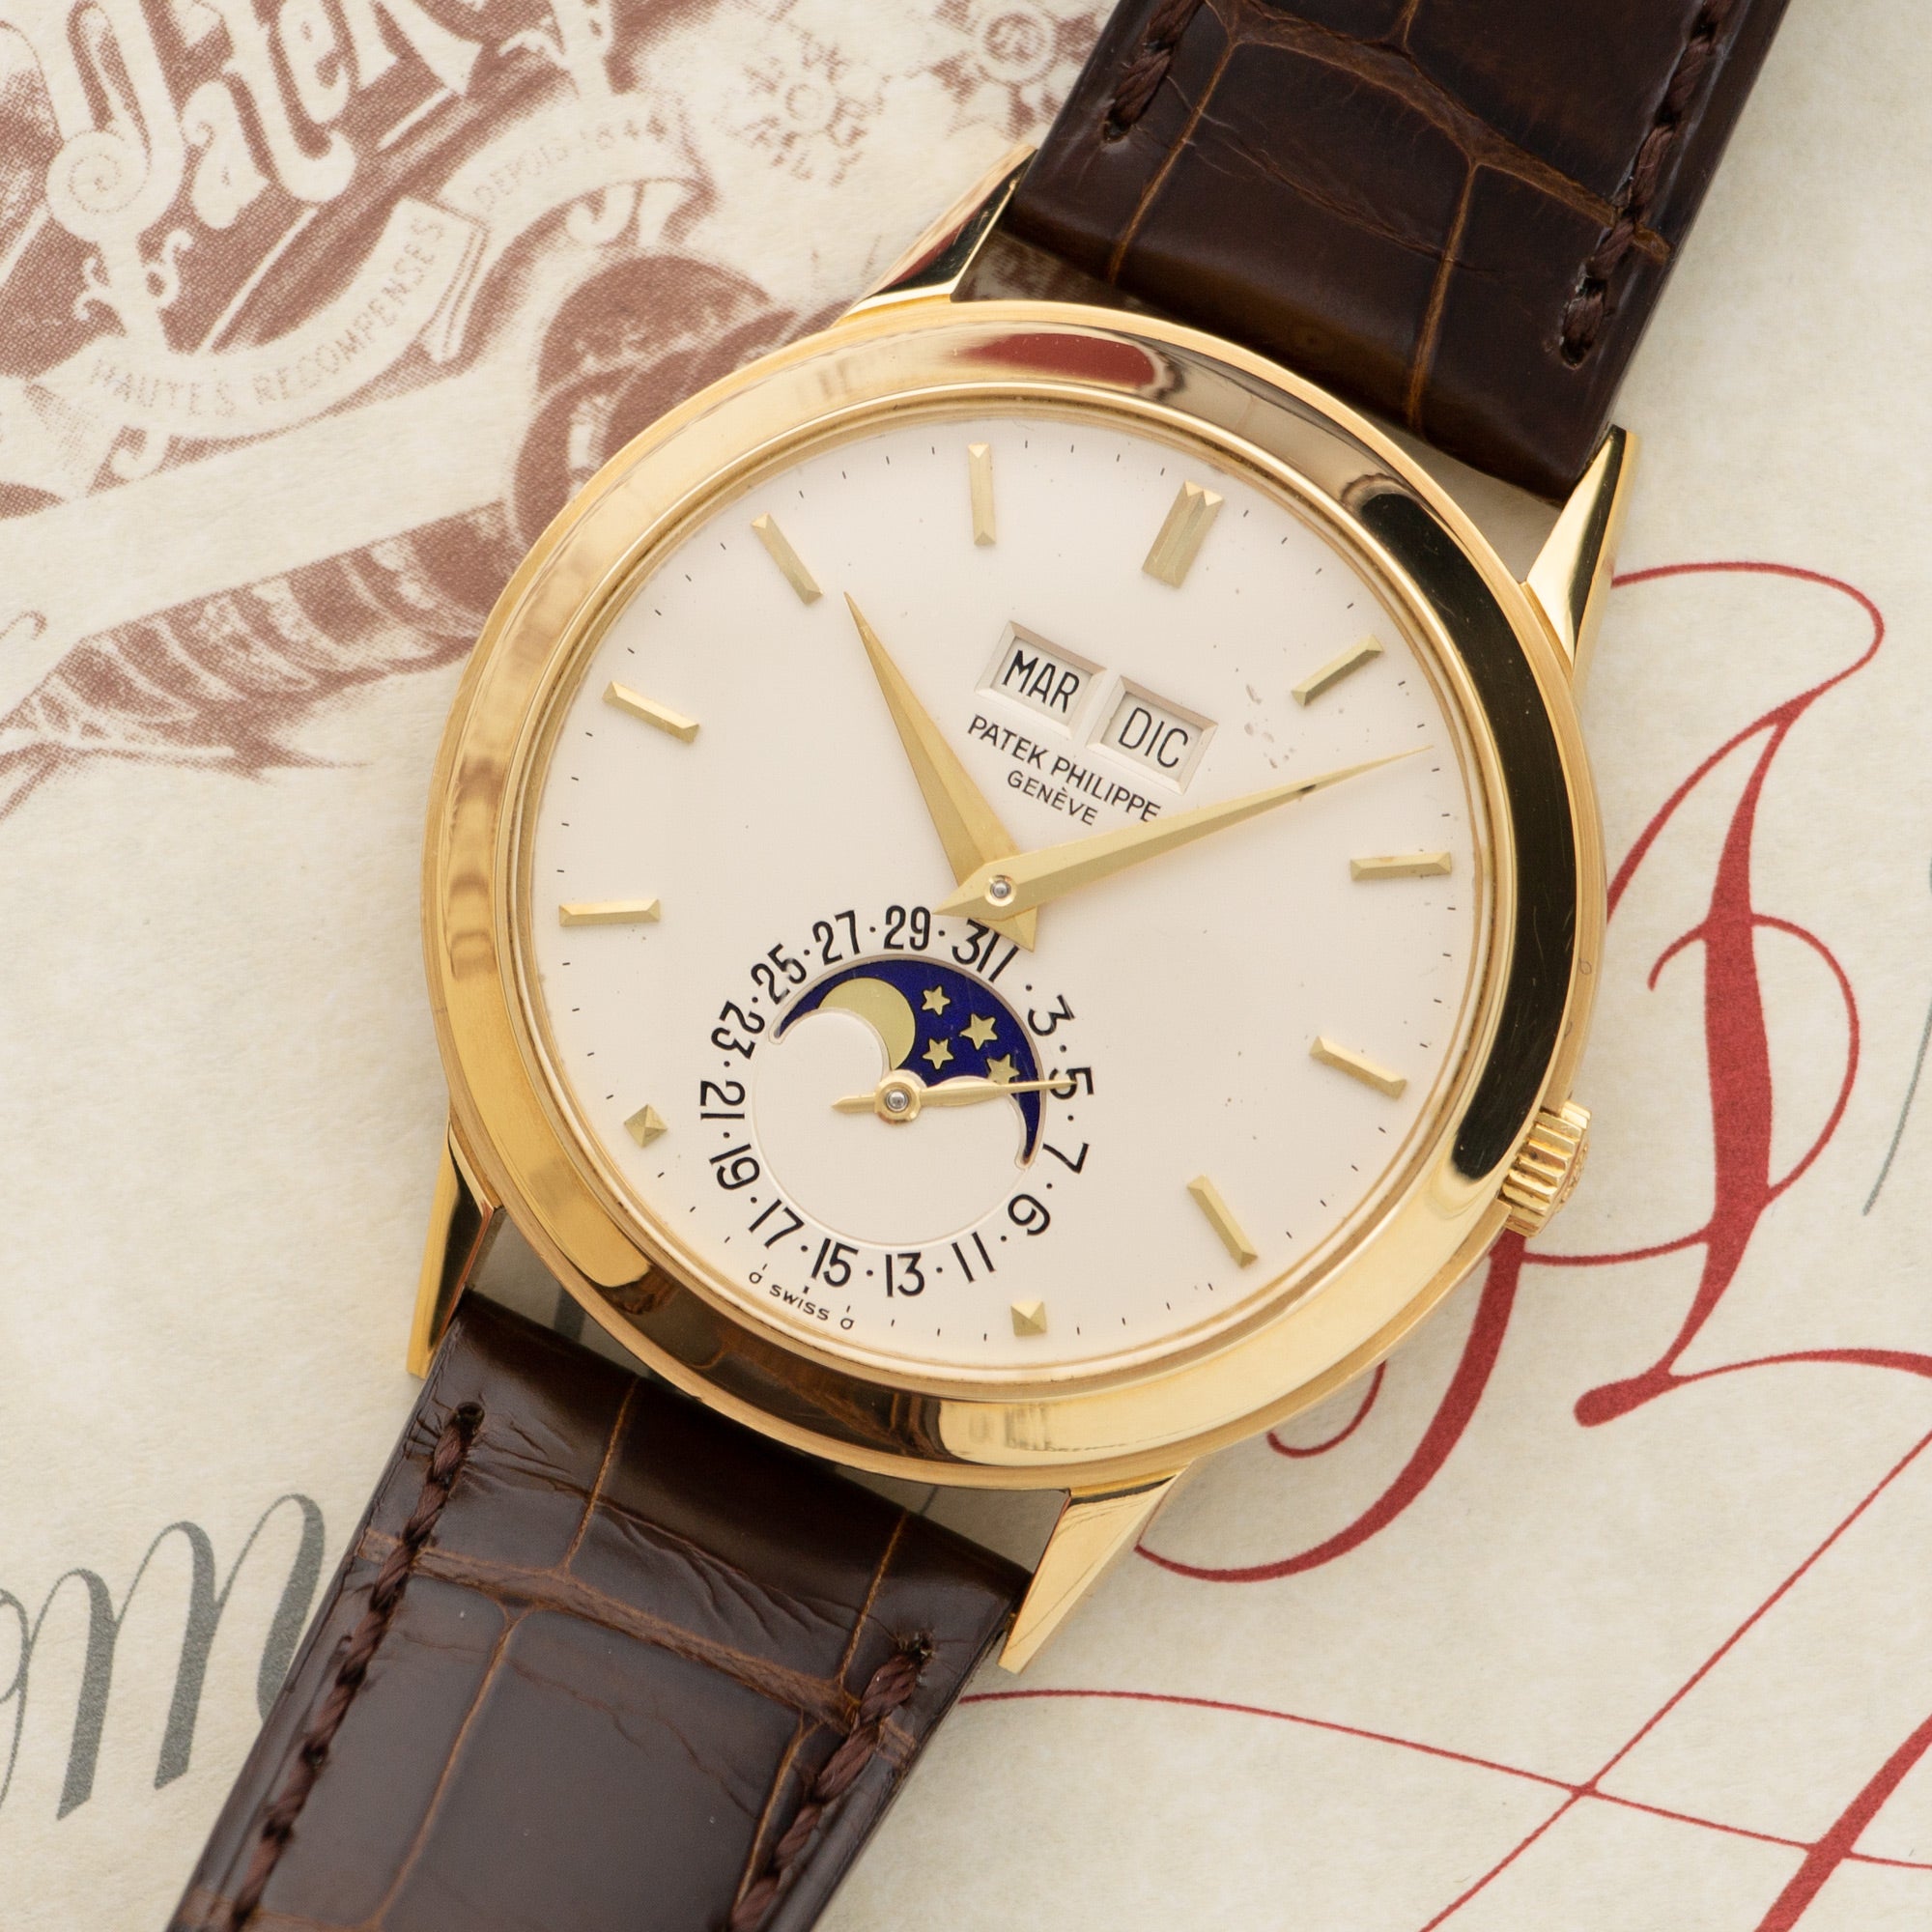 Patek Philippe - Patek Philippe Yellow Gold Perpetual Calendar Watch Ref. 3448 - The Keystone Watches